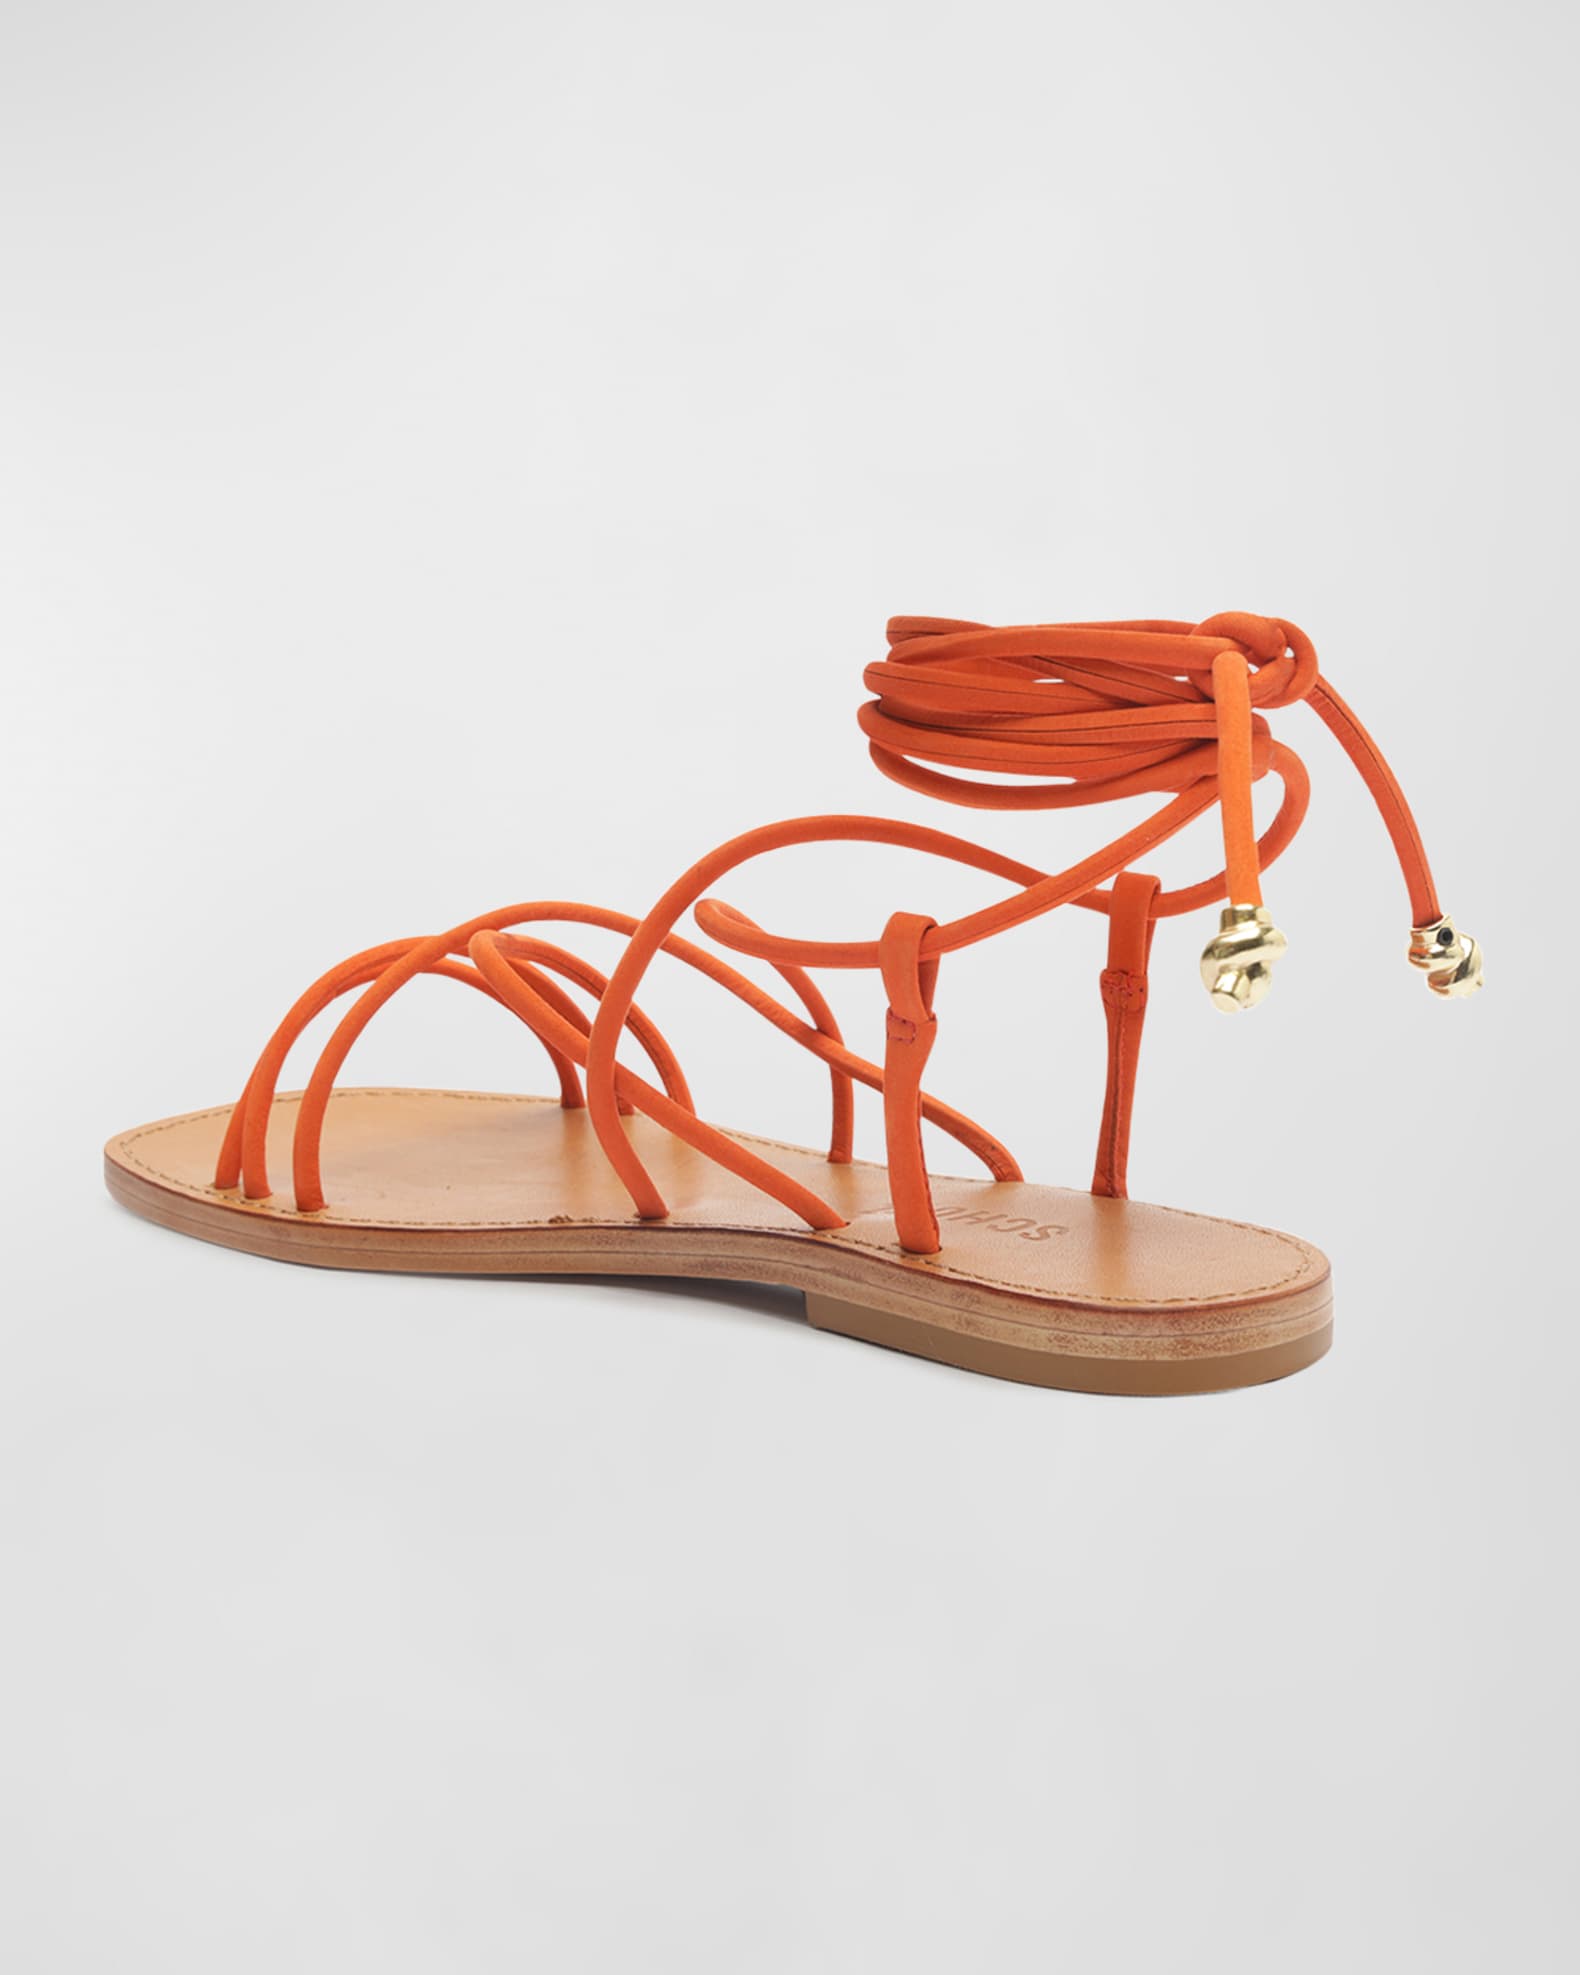 Schutz Magdalena Ankle-Tie Sandals | Neiman Marcus